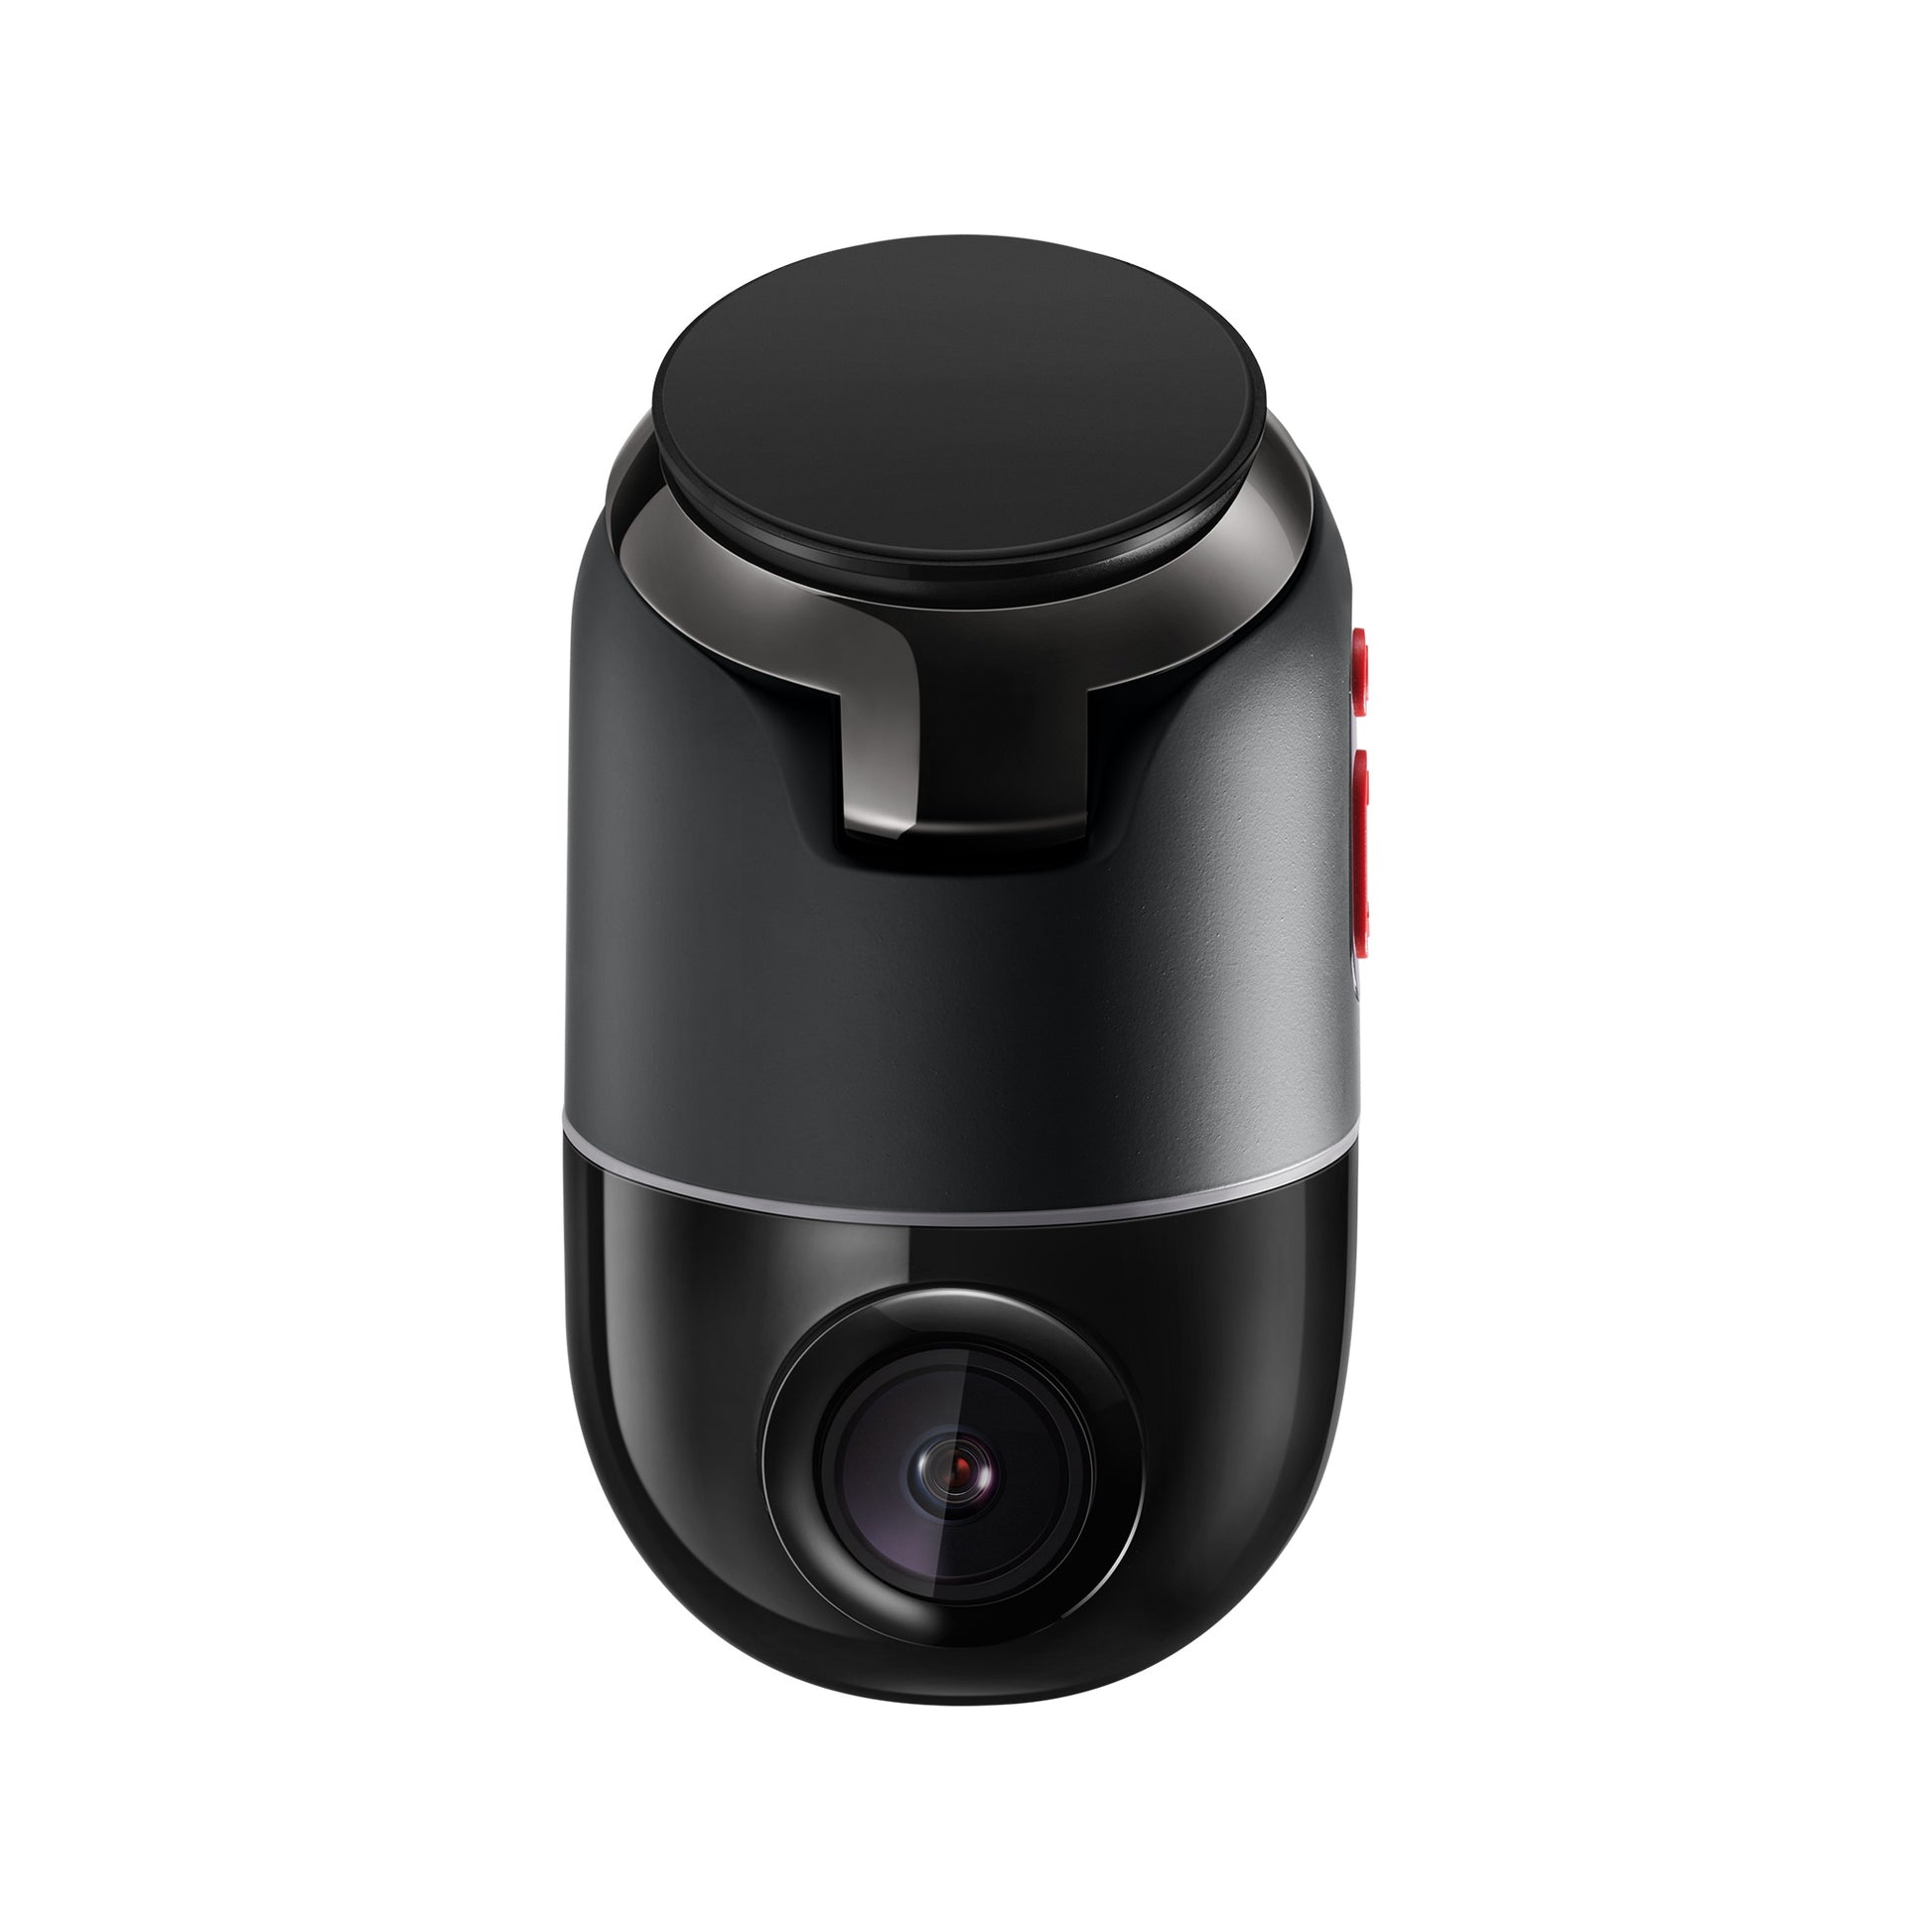 70mai Dash Cam Omni, 360° Rotating, Superior Night Vision,Built-in 128GB  eMMC Storage, Time-Lapse Recording, 24H Parking Mode, AI Motion Detection